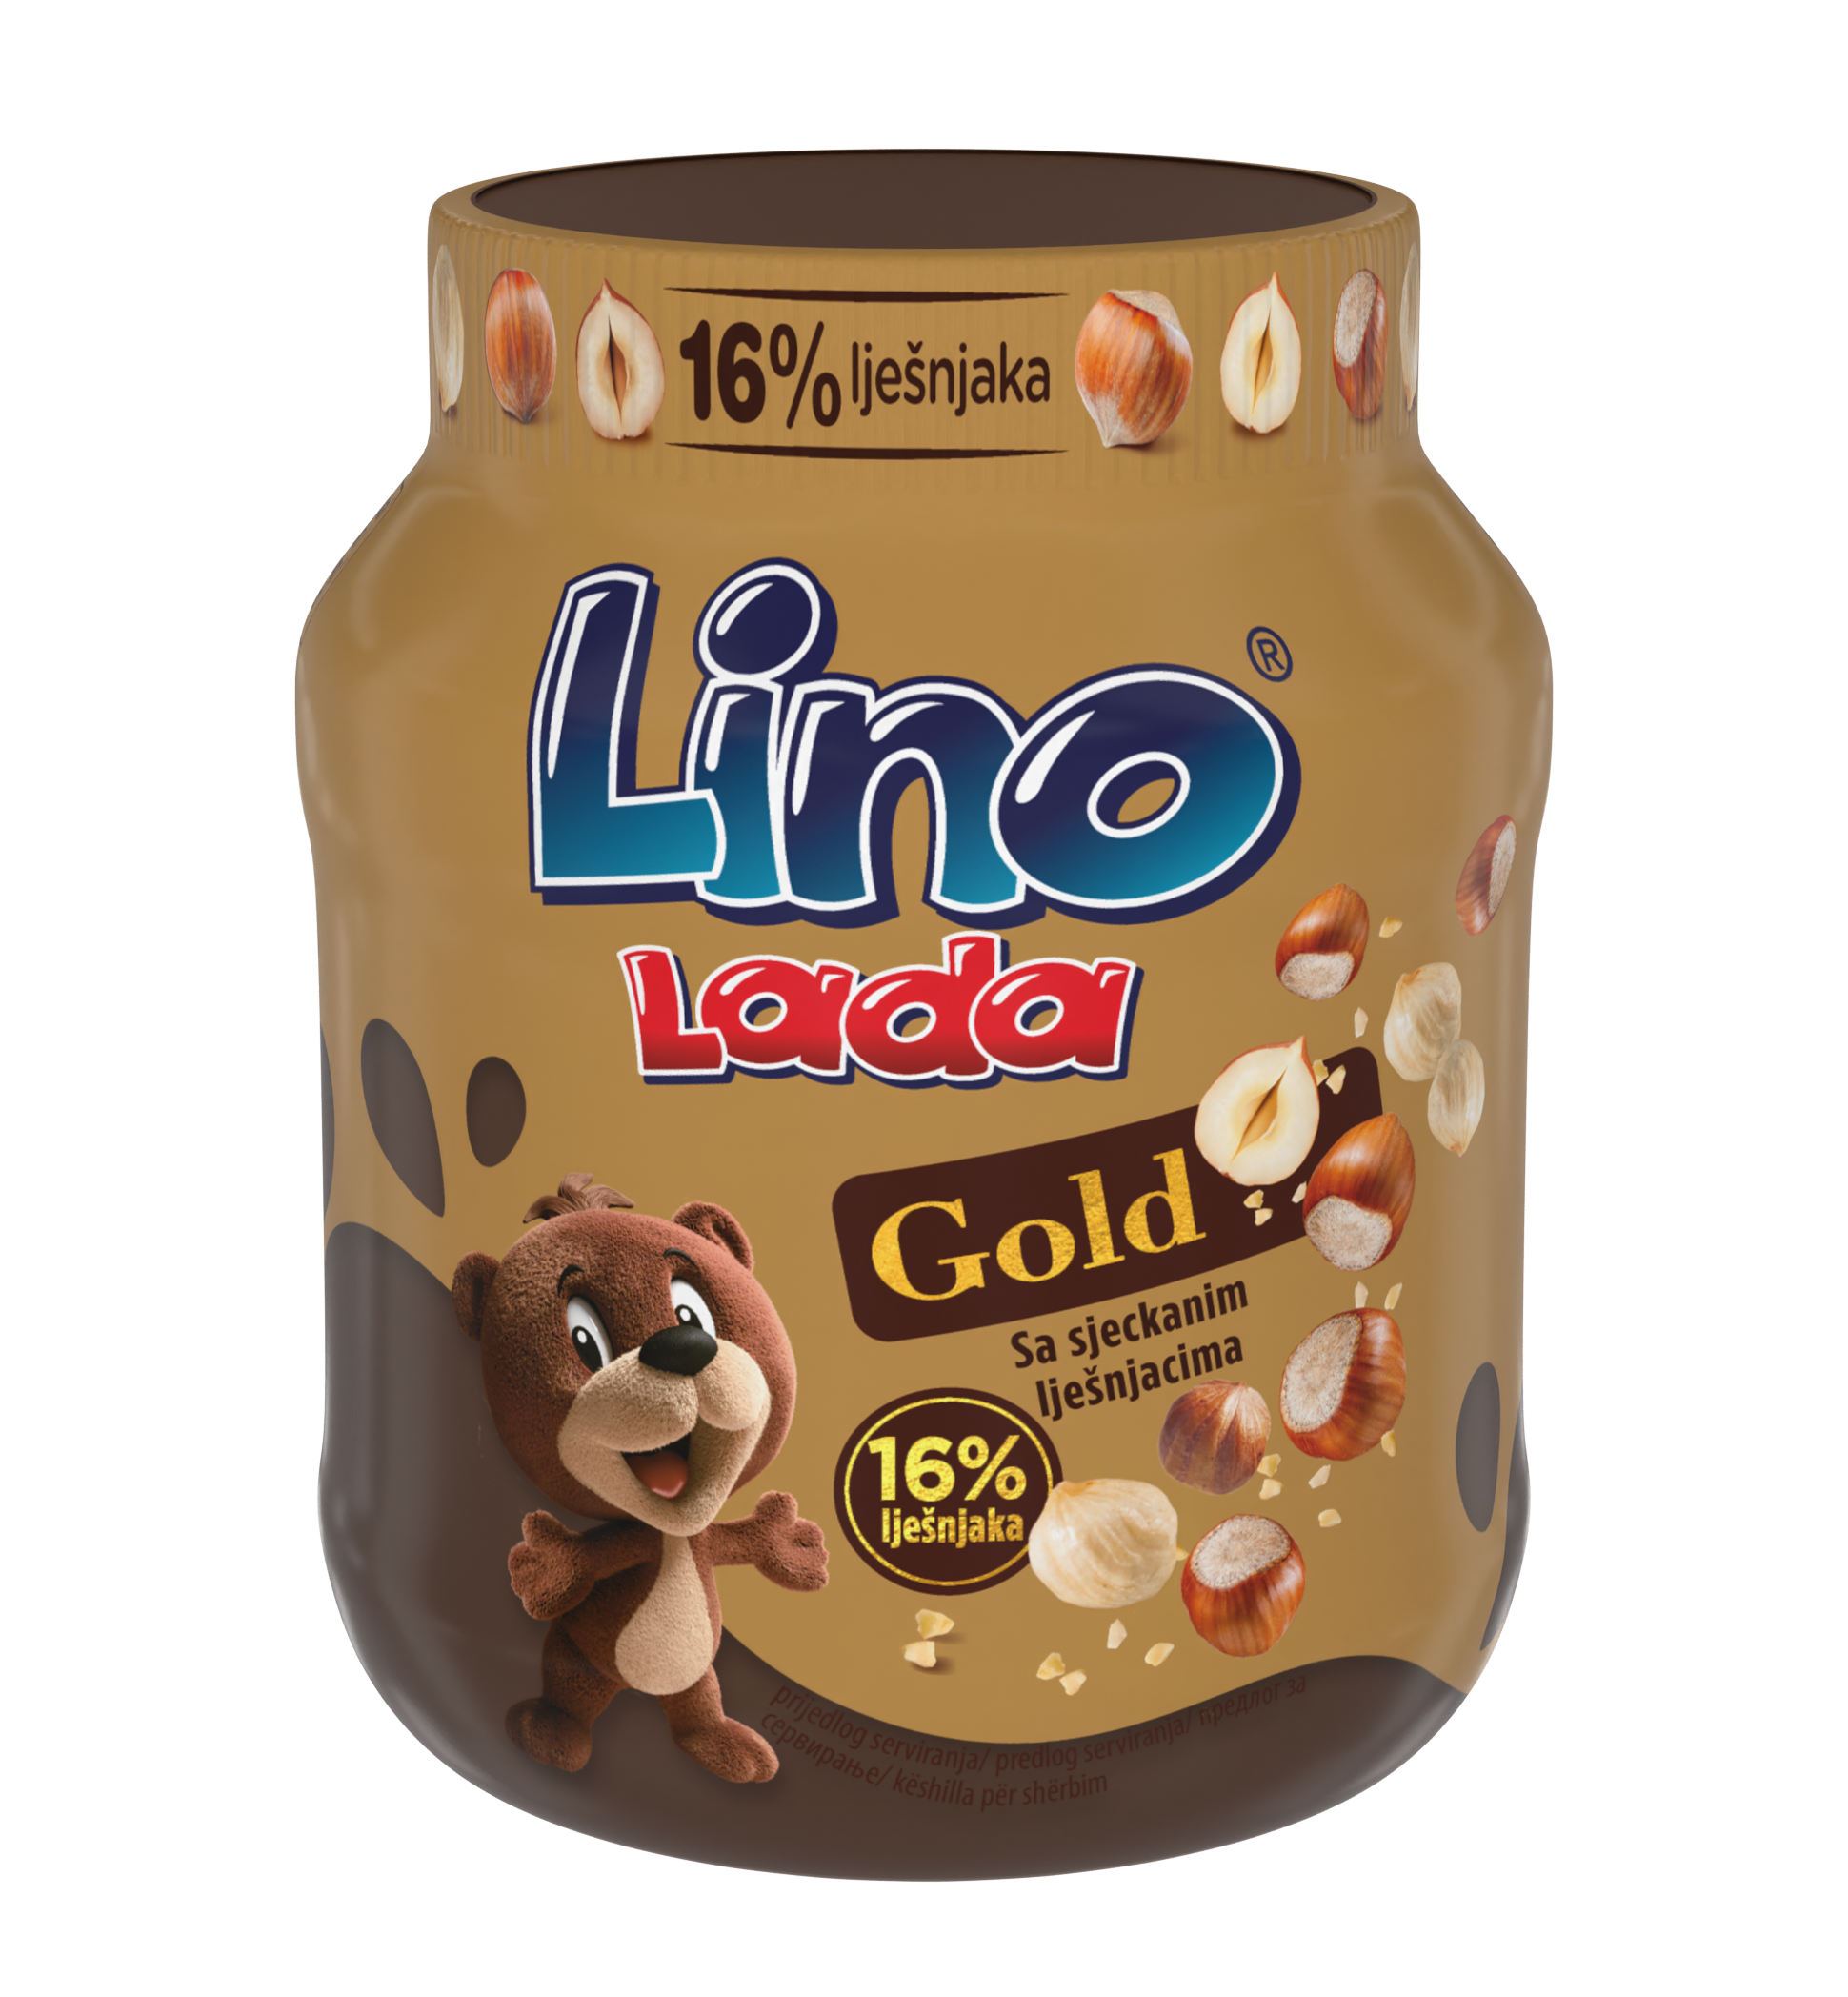 Lino Lada Gold 650 g